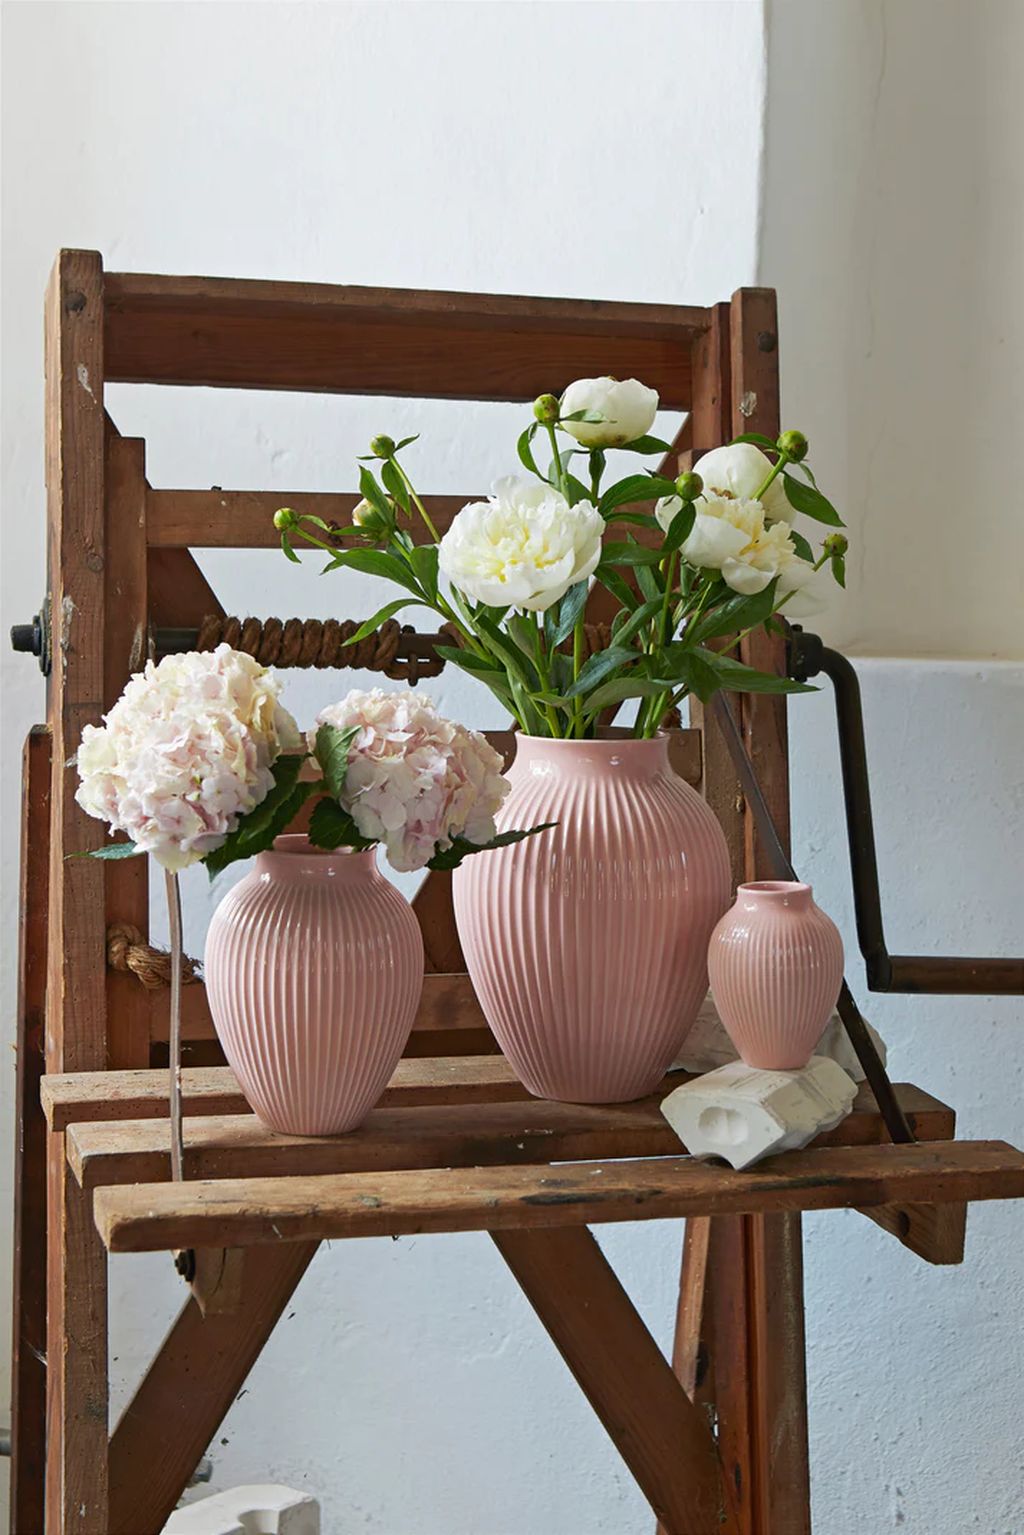 Jarrón Knabstrup Keramik con ranuras H 20 cm, rosa